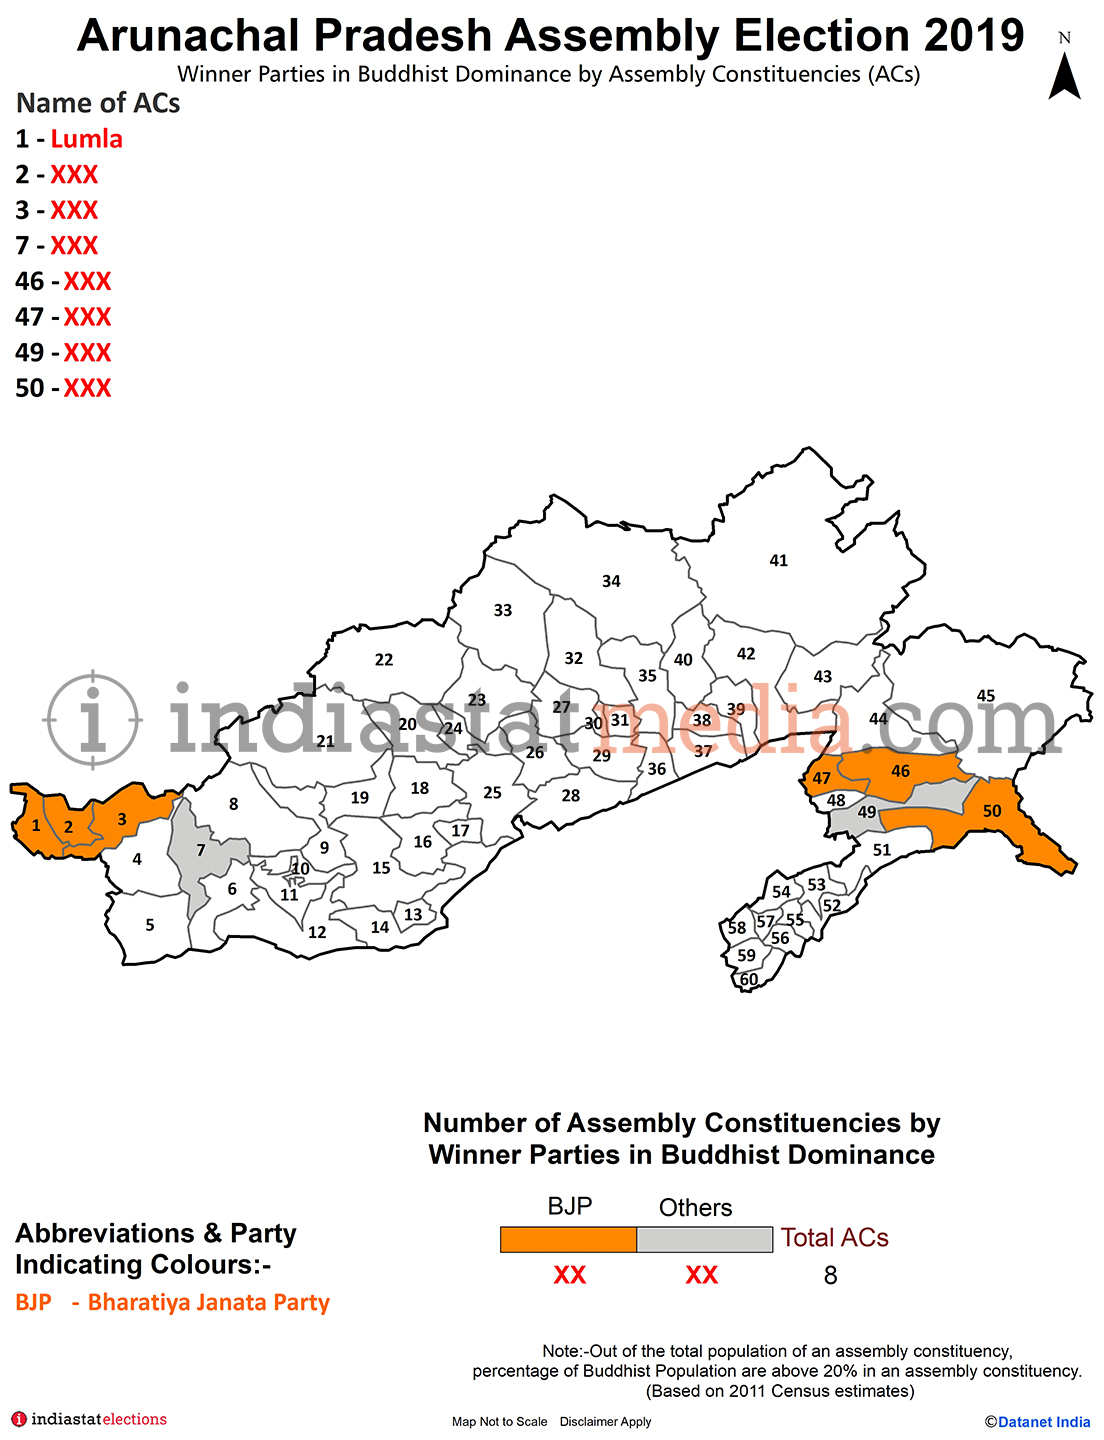 Winner Parties in Buddhist Dominance by Constituencies in Arunachal Pradesh (Assembly Election - 2019)